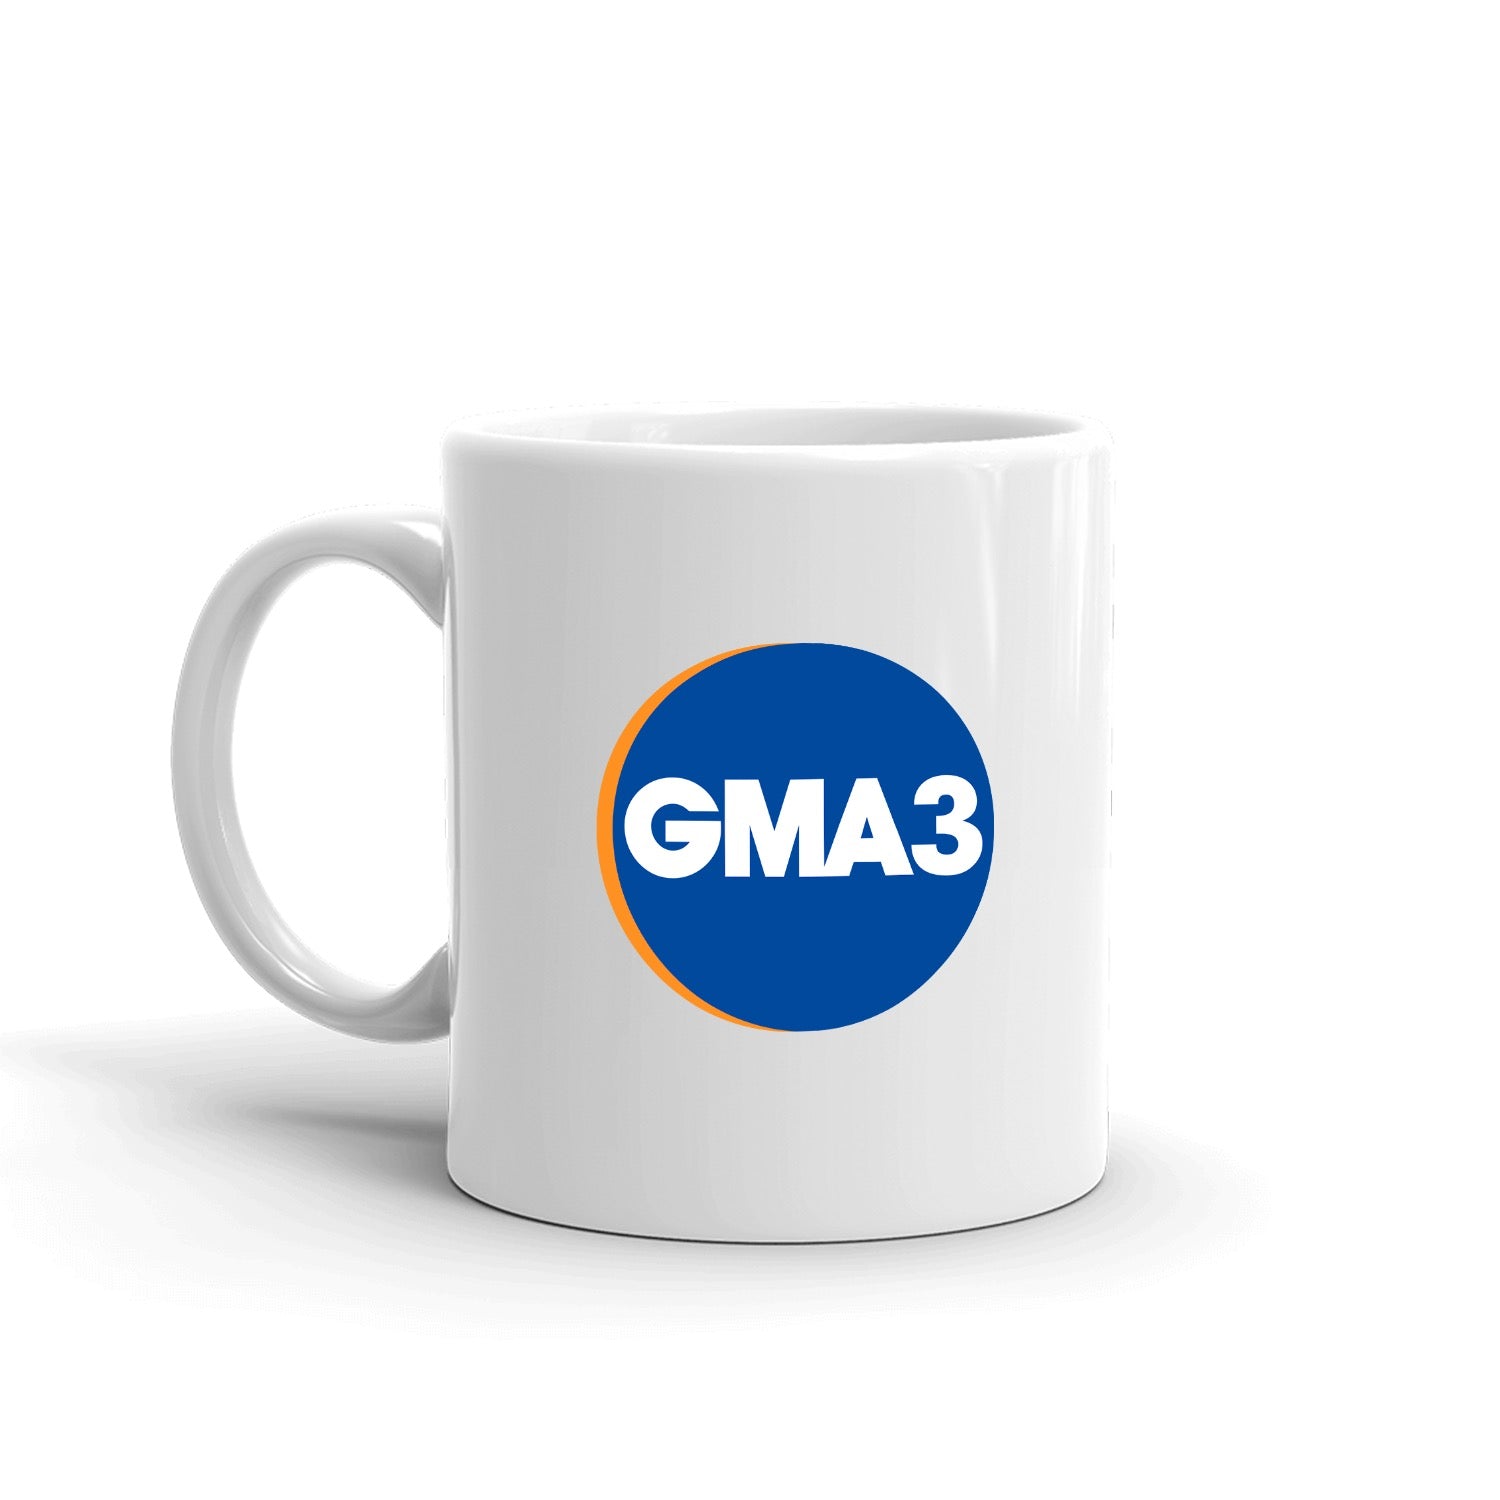 GMA3 Logo White Mug - Made in the USA